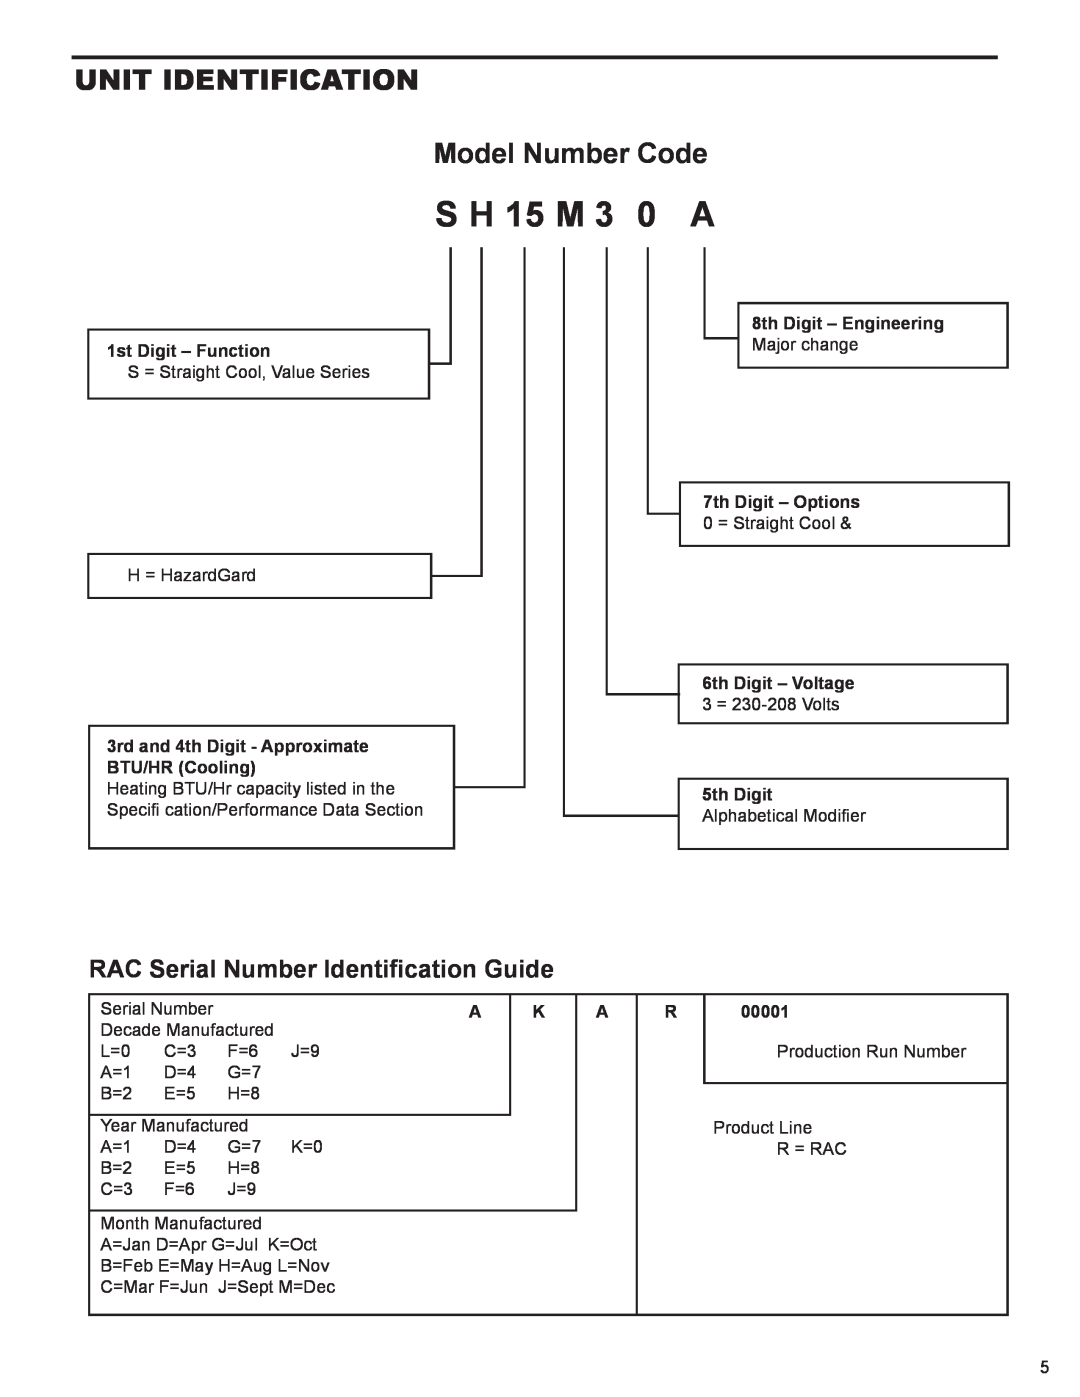 Friedrich R-410A Unit Identification Model Number Code, RAC Serial Number Identification Guide, S H 15 M 3 0 A, 00001 